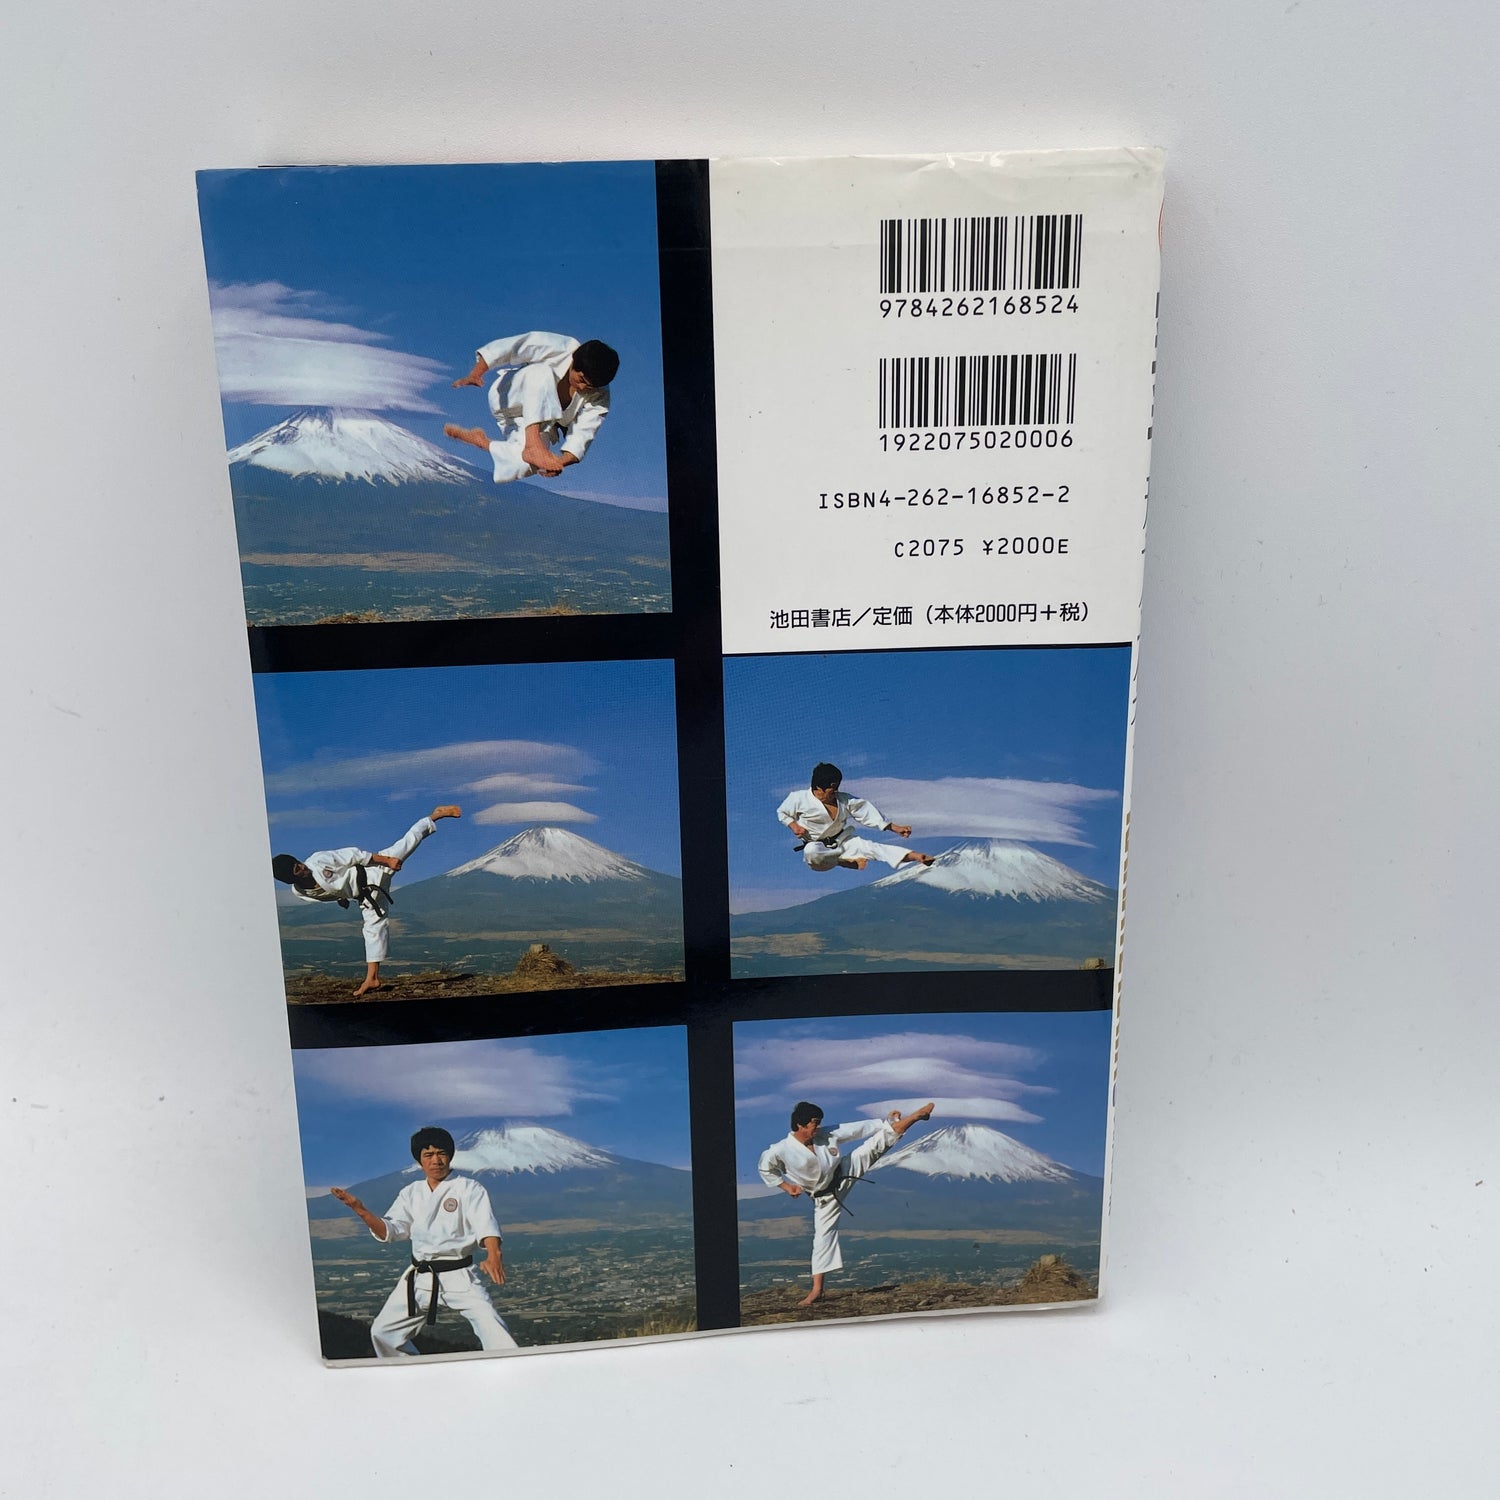 Shotokan Karate International Kata: Volume 2 Book by Hirokazu Kanazawa (Preowned)